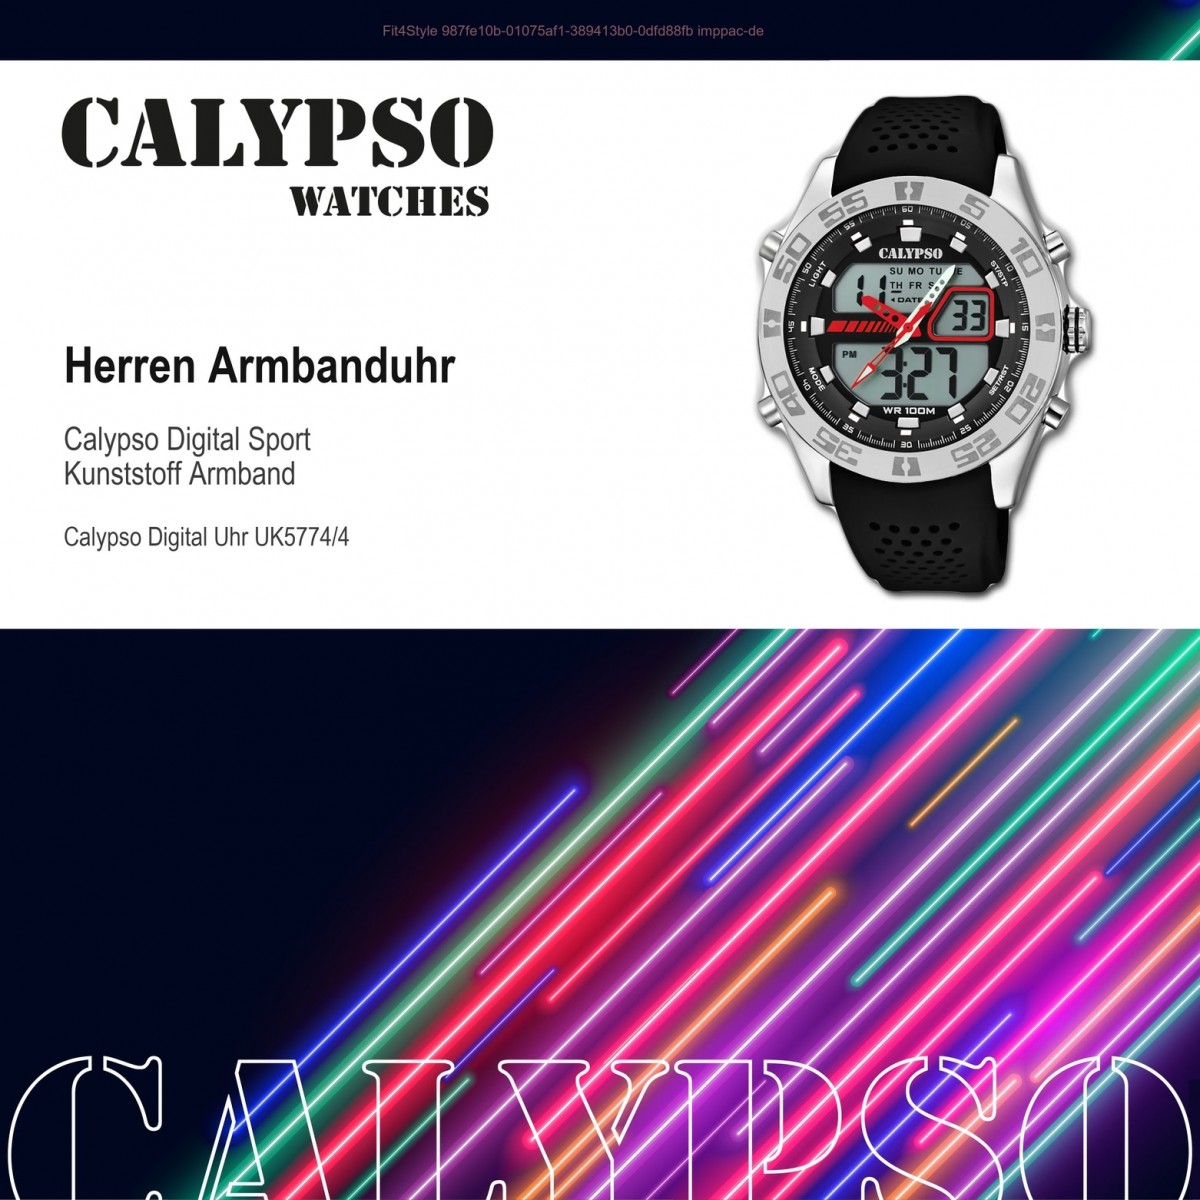 Style Quarz-Uhr K5774/4 Armbanduhr Calypso PU Herren schwarz UK5774/4 Street